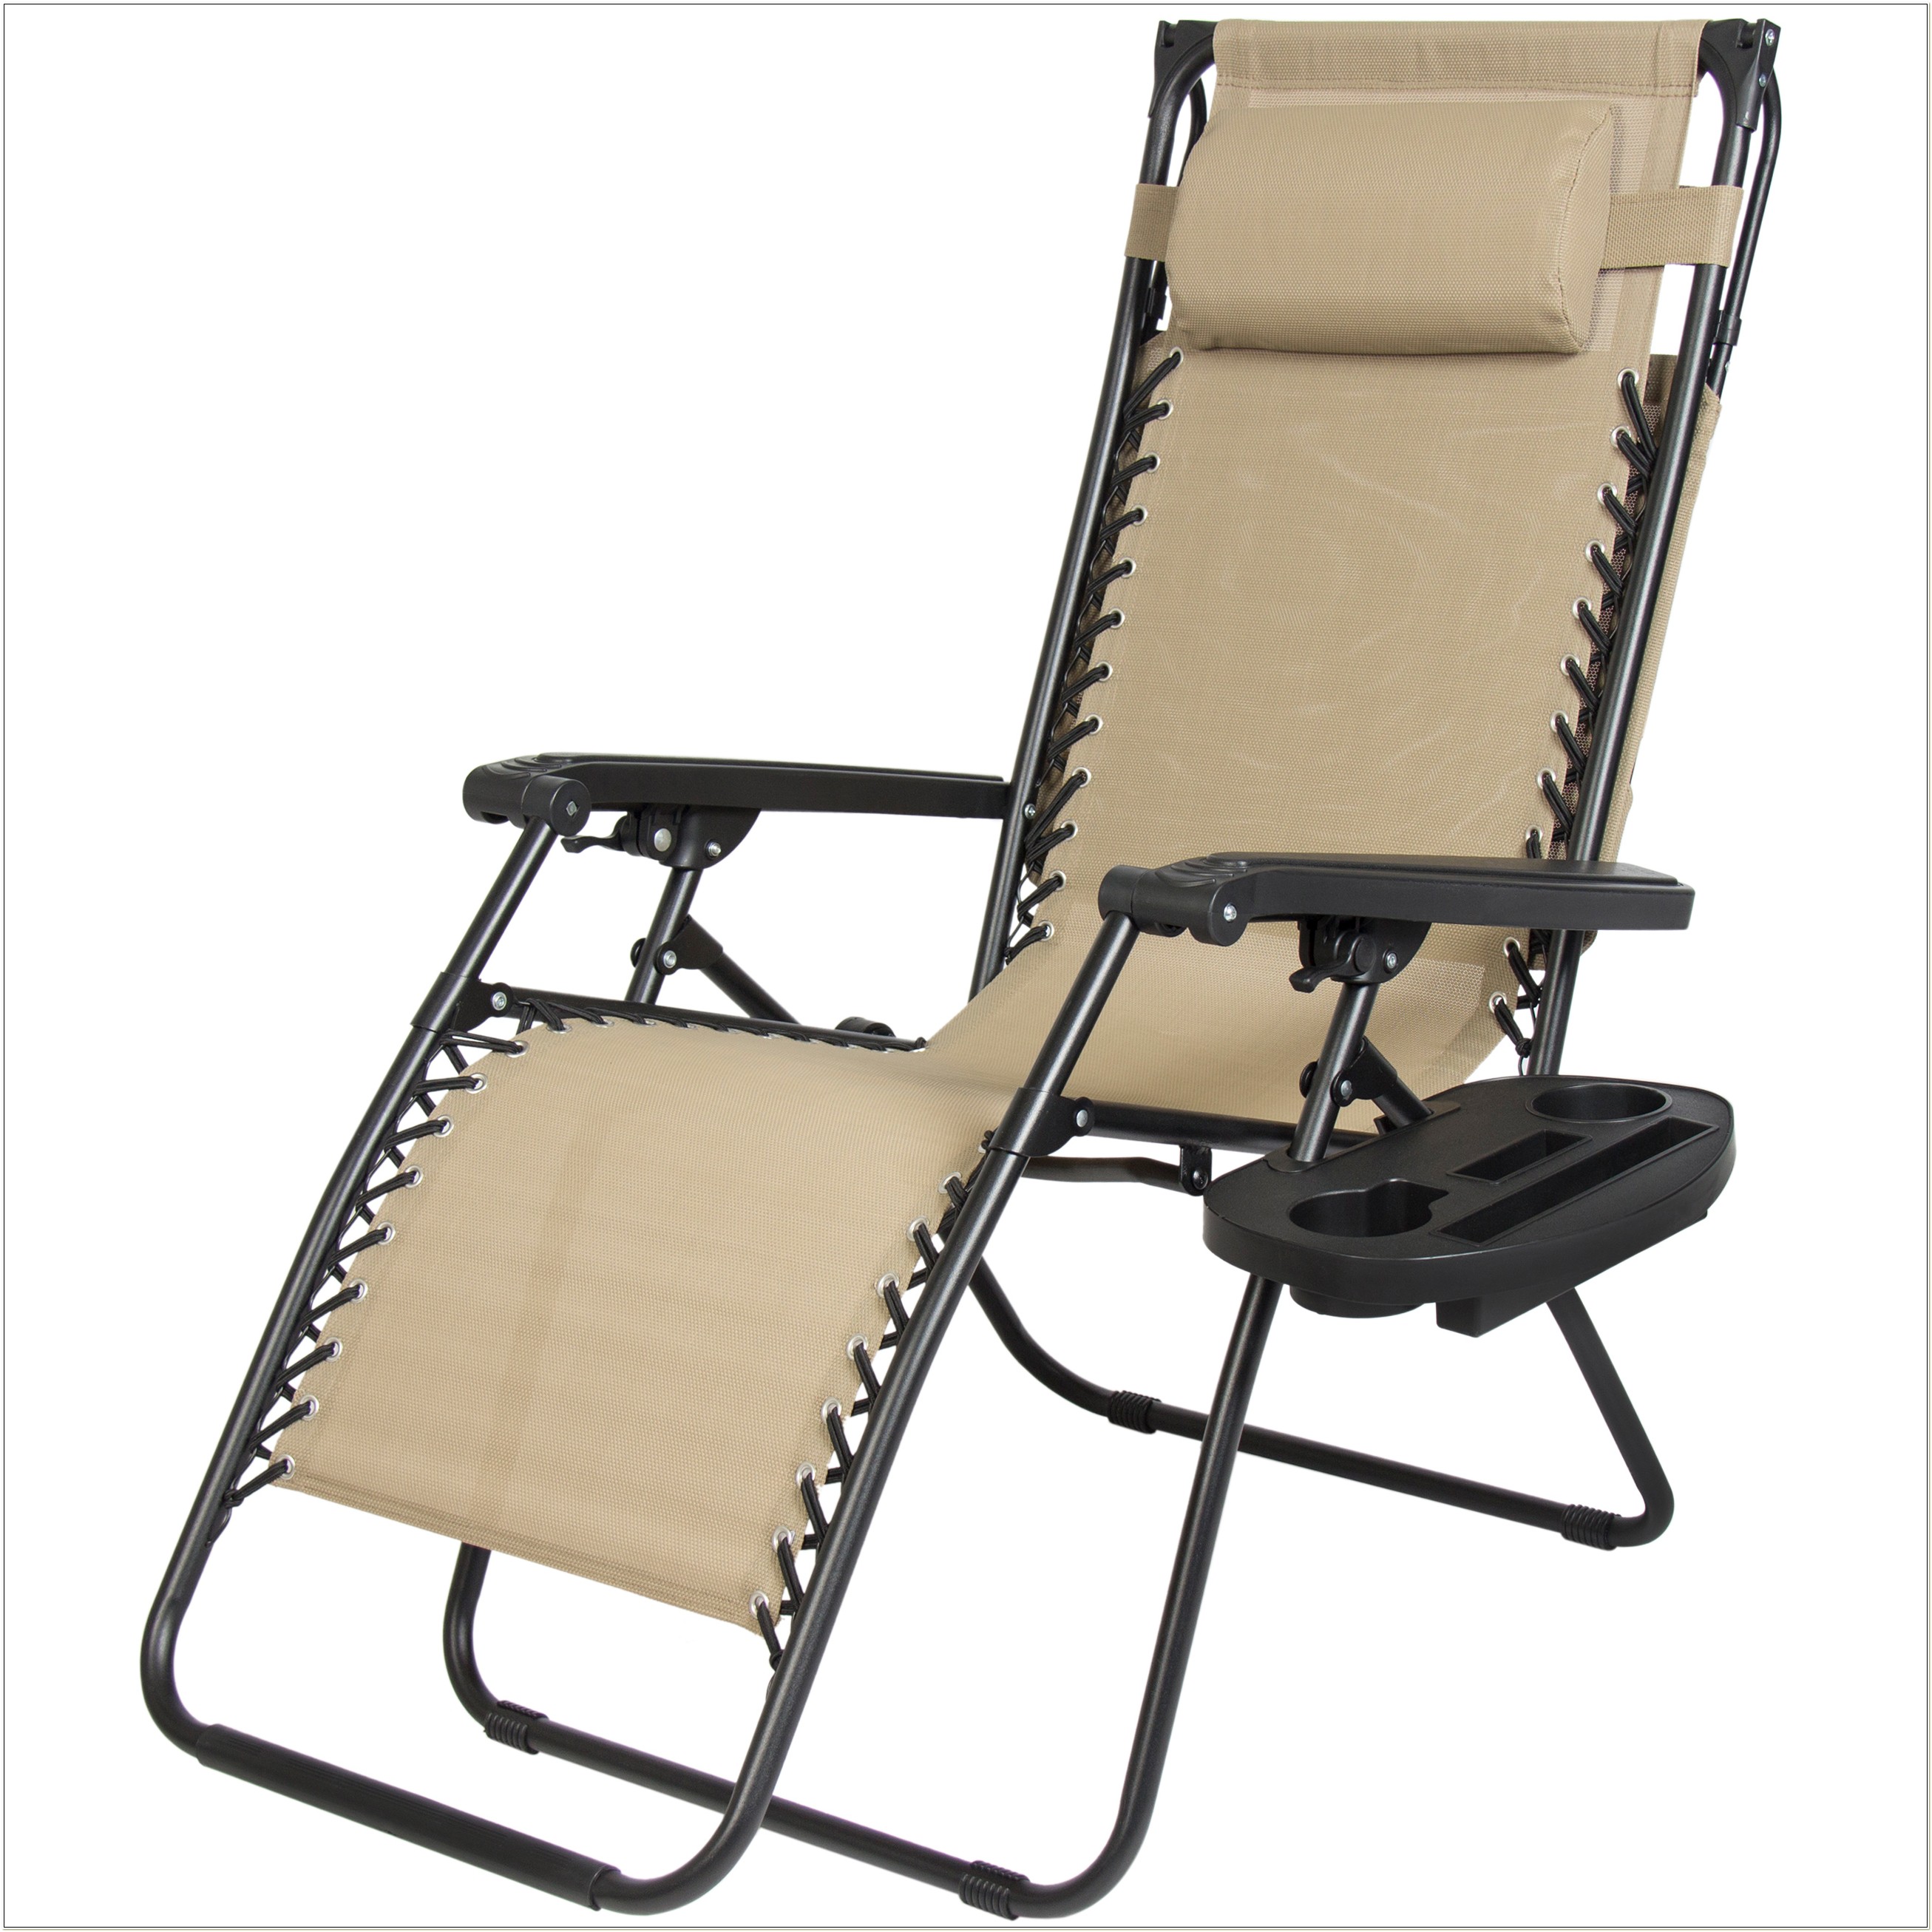 Zero Gravity Lawn Chair Target - Chairs : Home Decorating Ideas #bn2rvqog2W